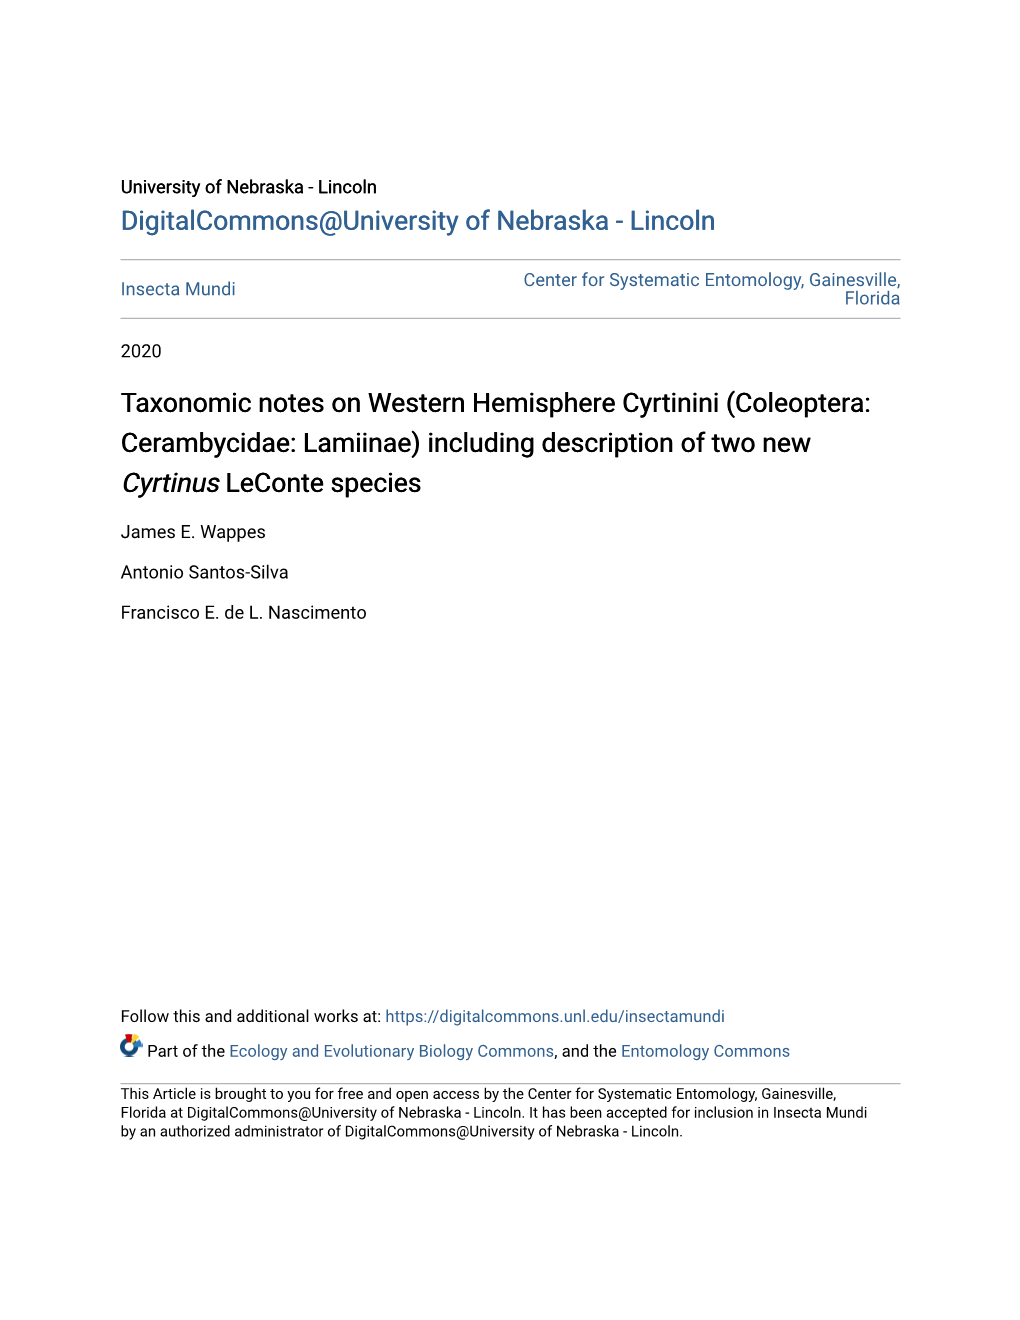 Coleoptera: Cerambycidae: Lamiinae) Including Description of Two New Cyrtinus Leconte Species